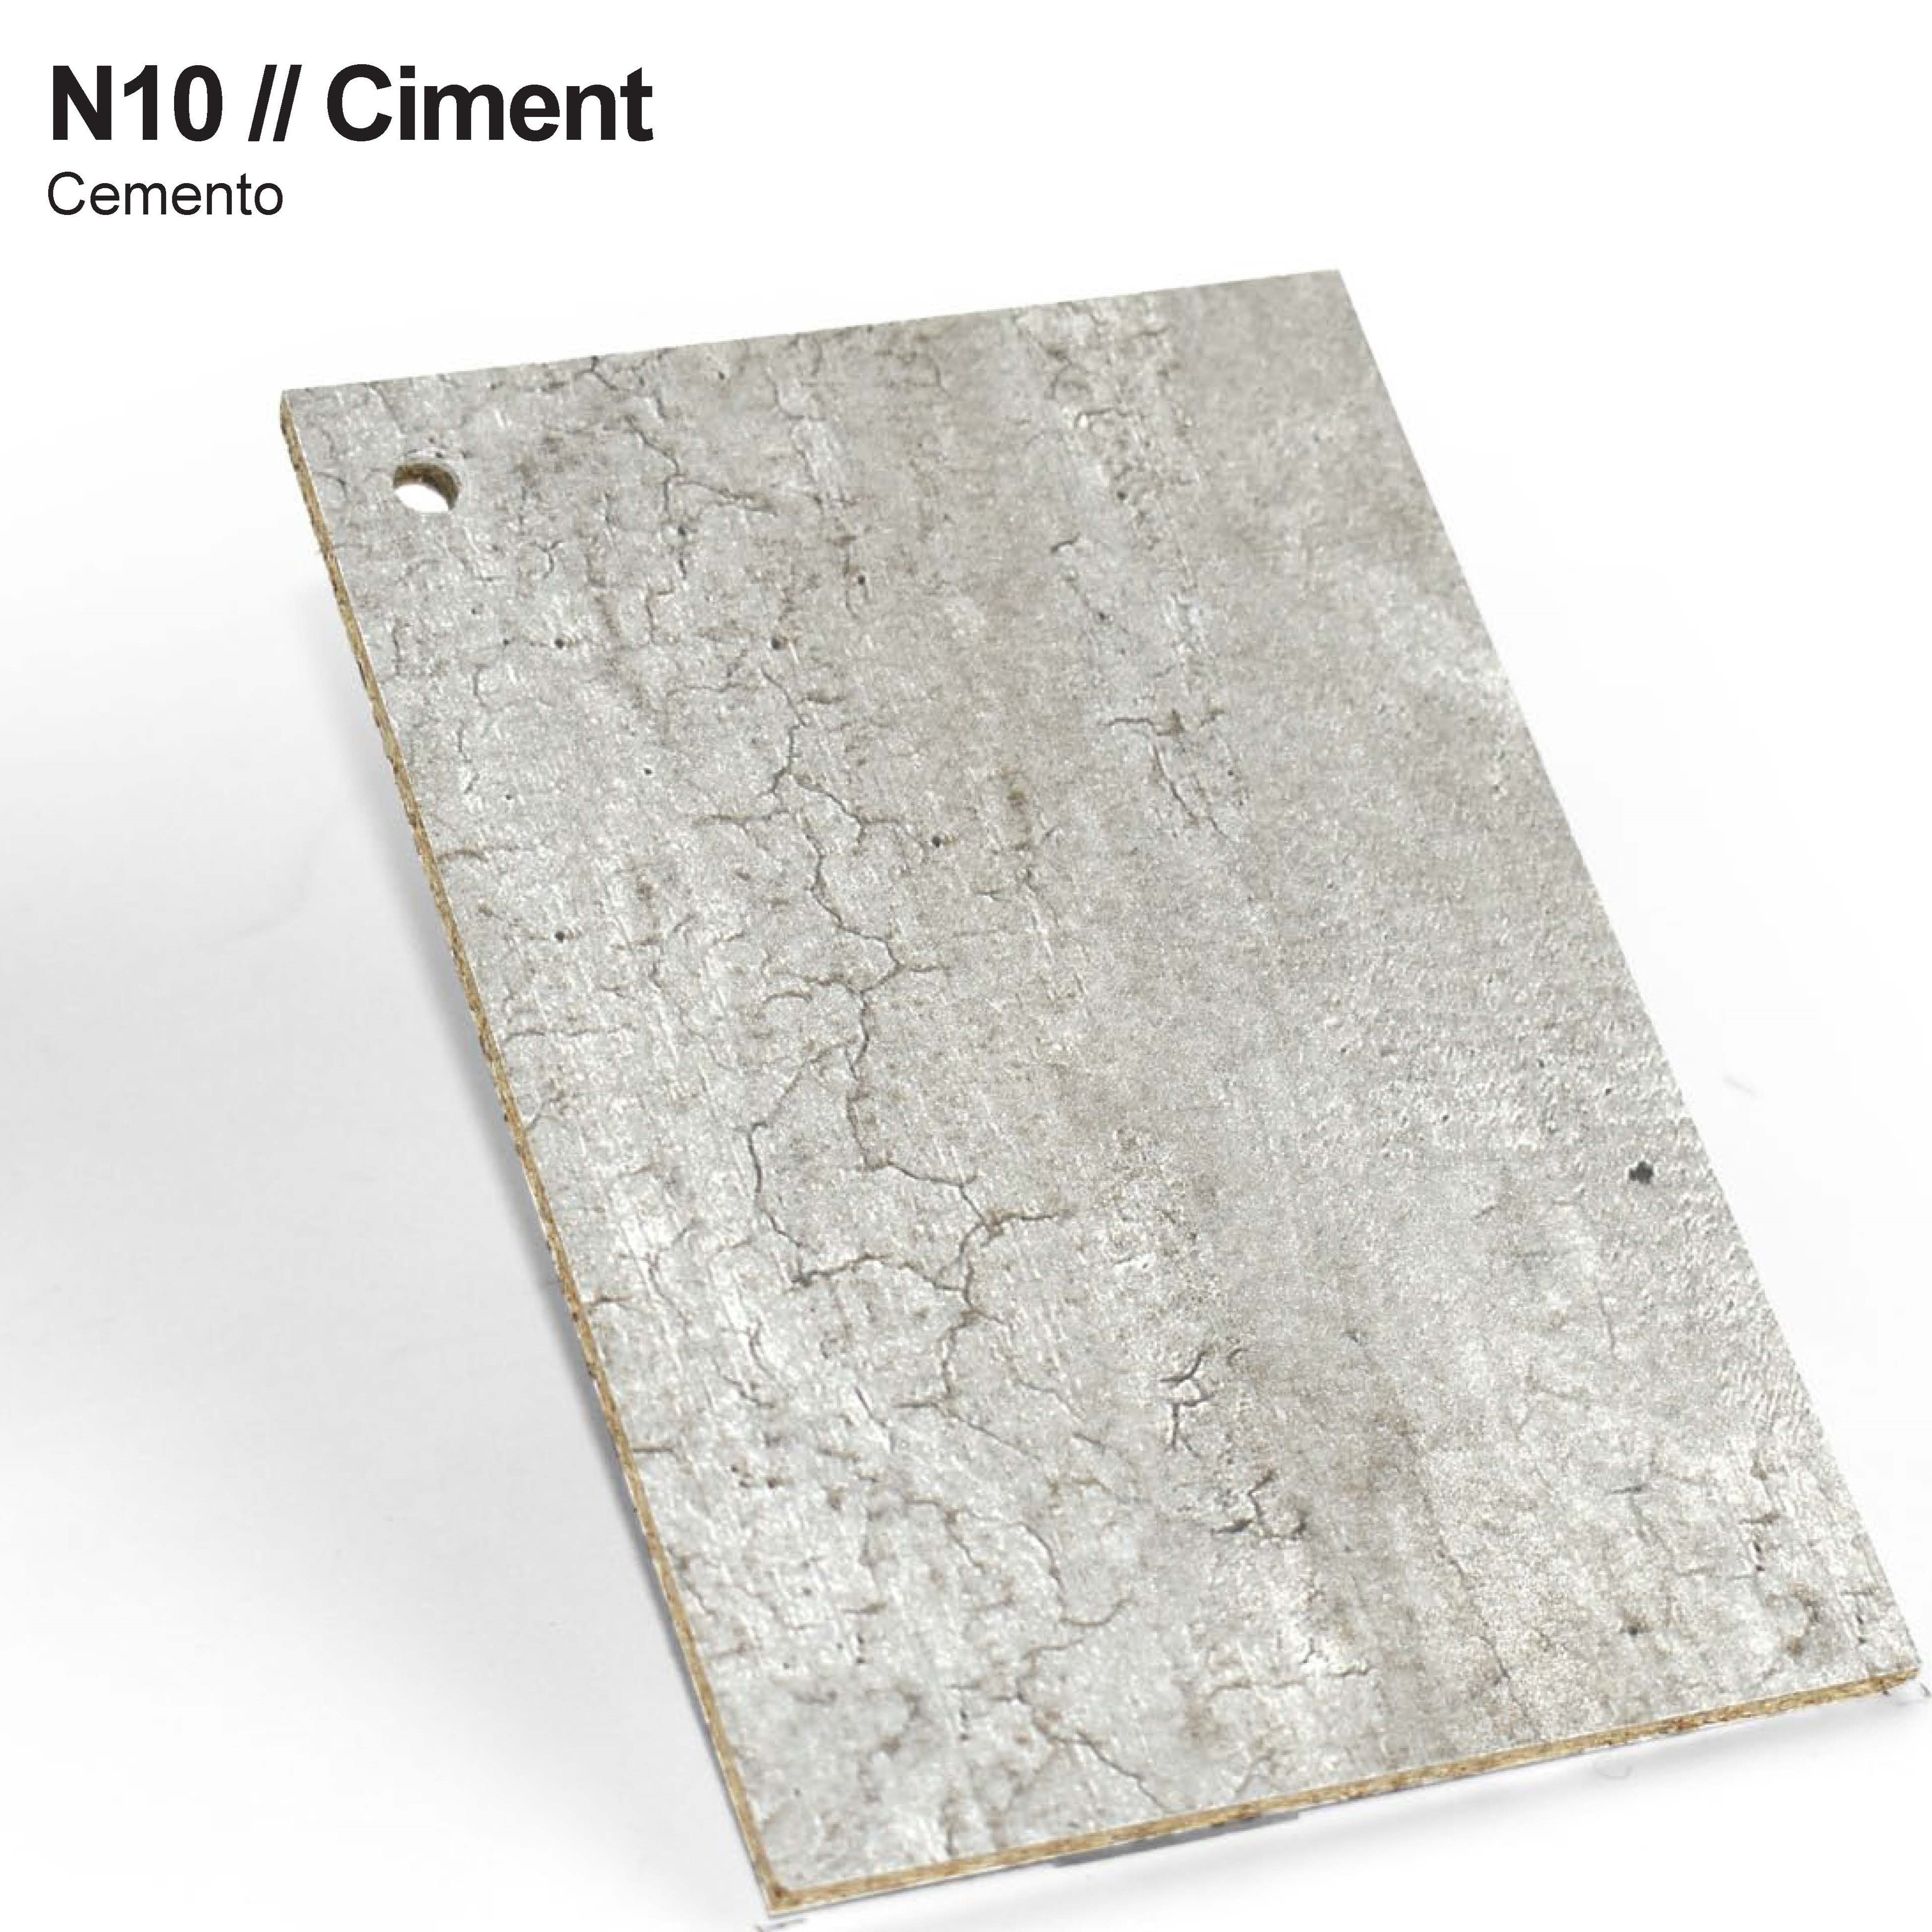 Ciment N10